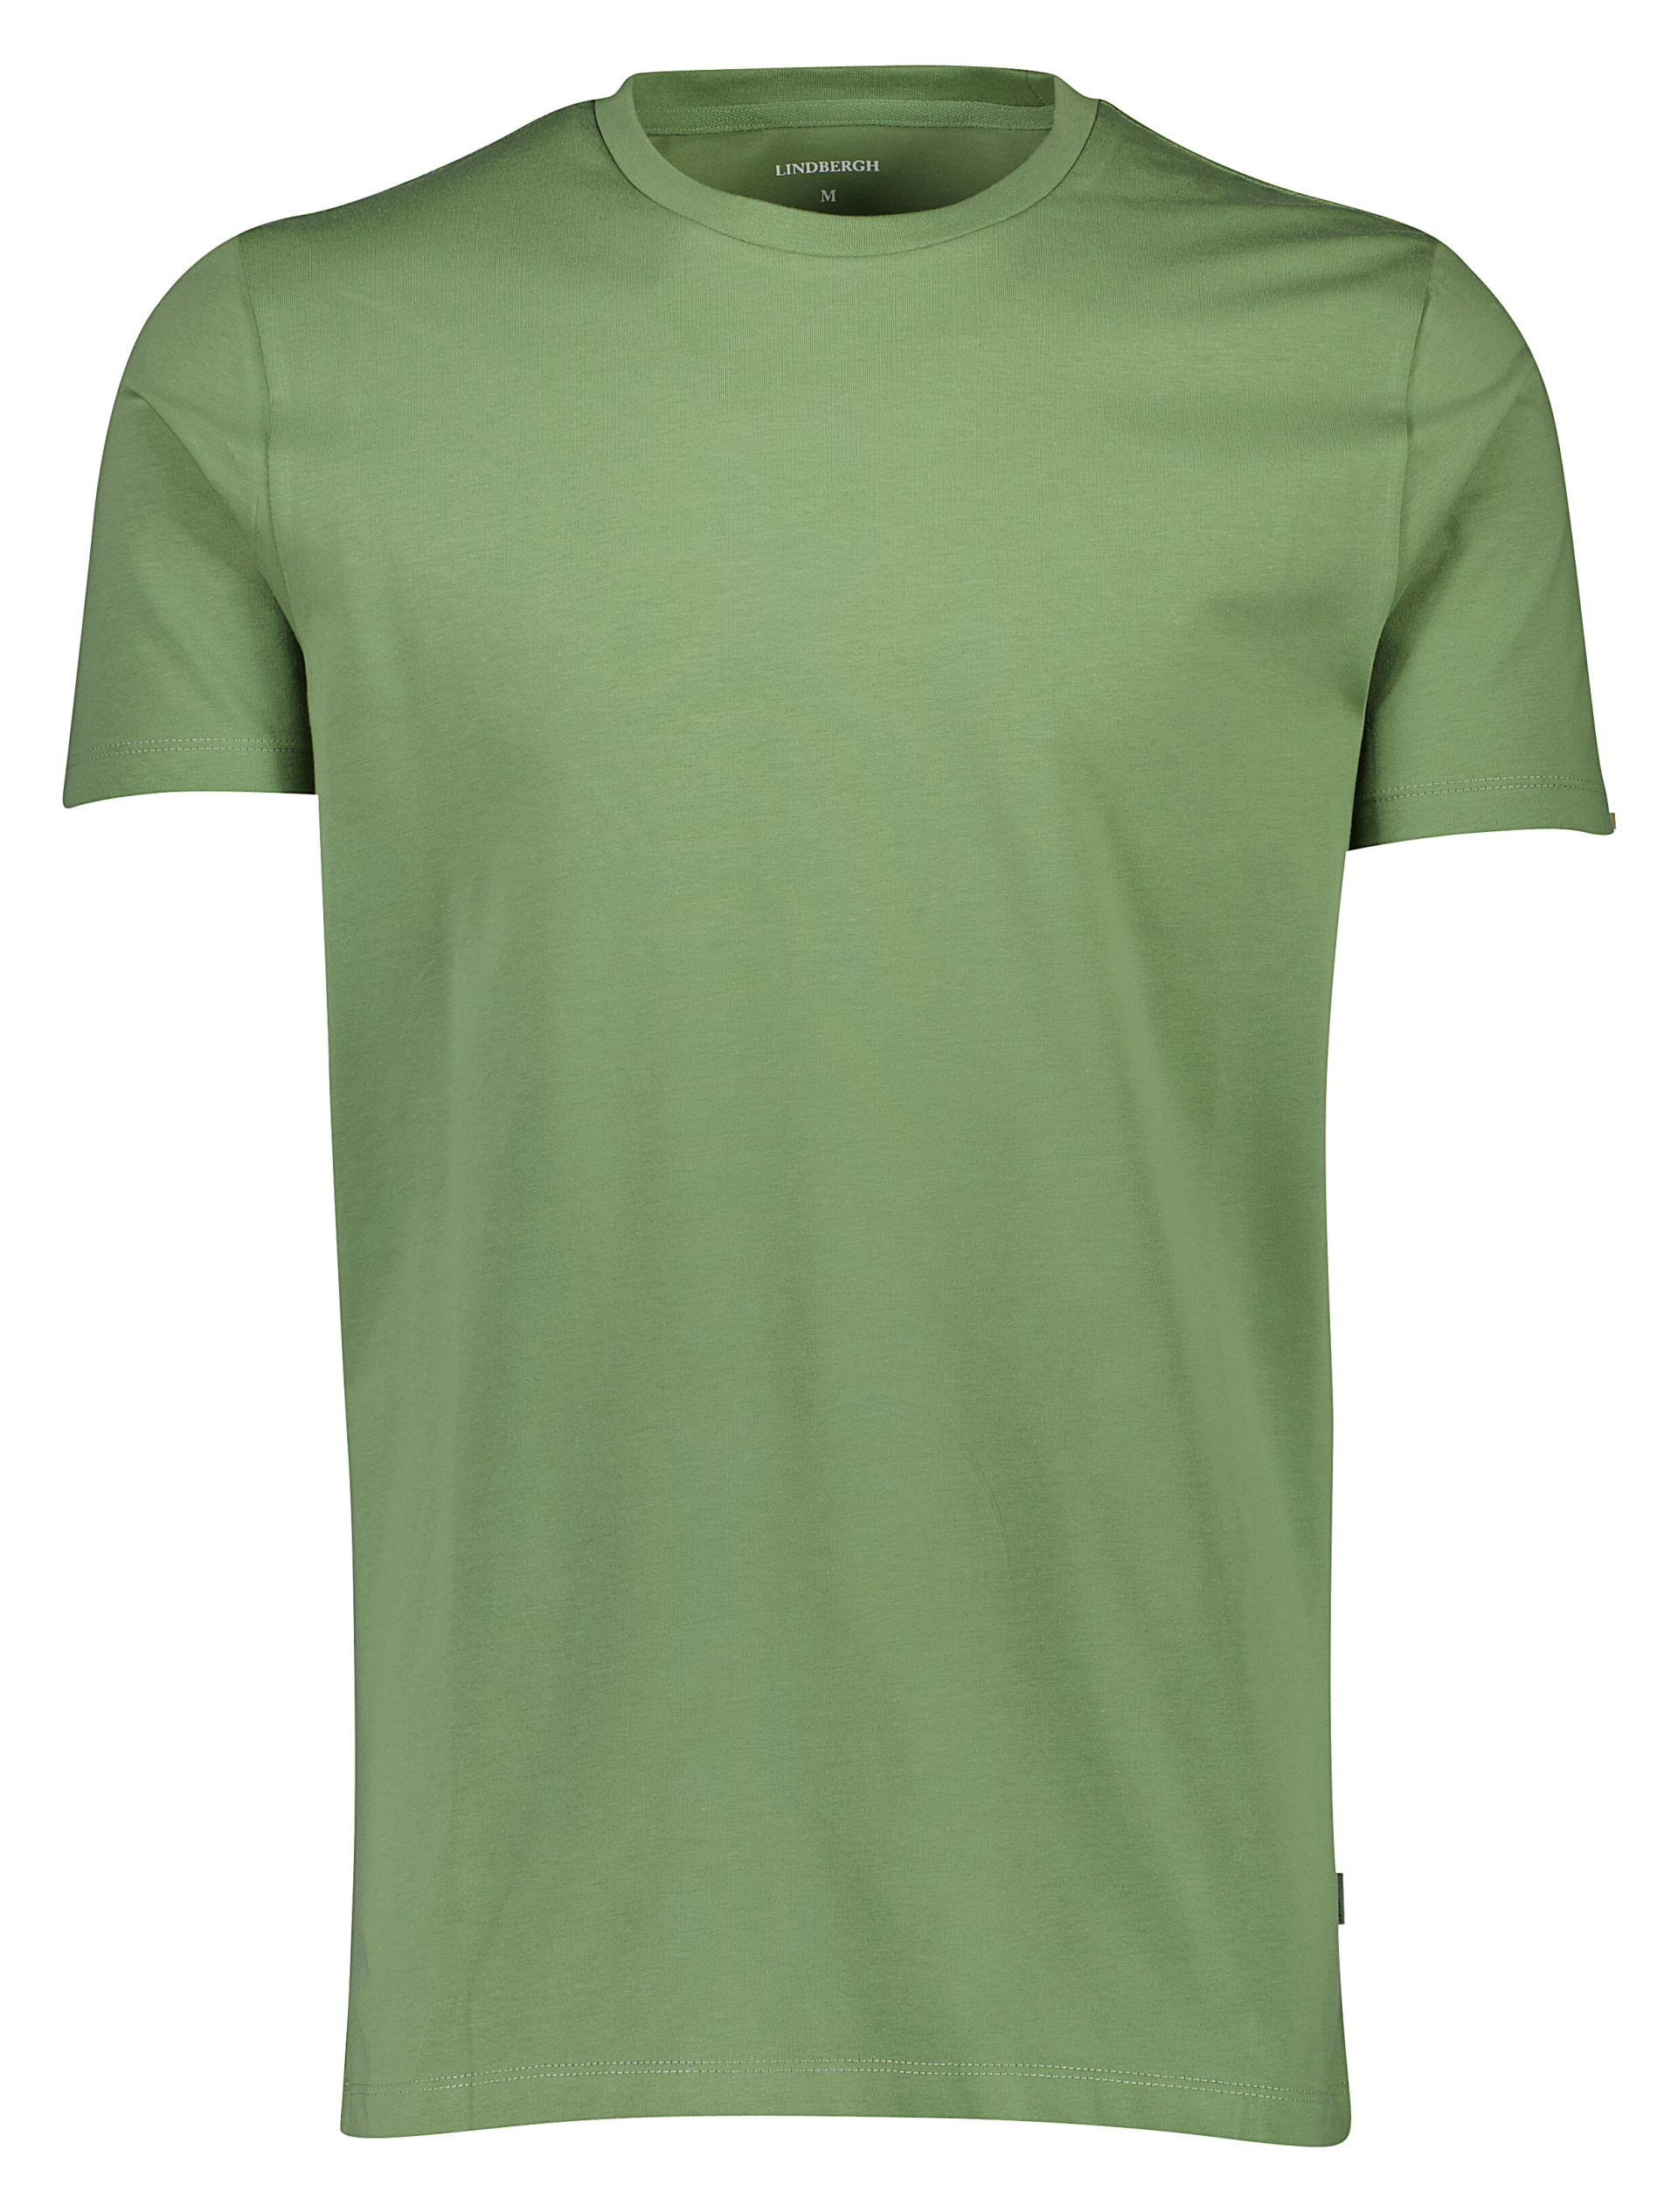 Lindbergh T-shirt grön / mid green